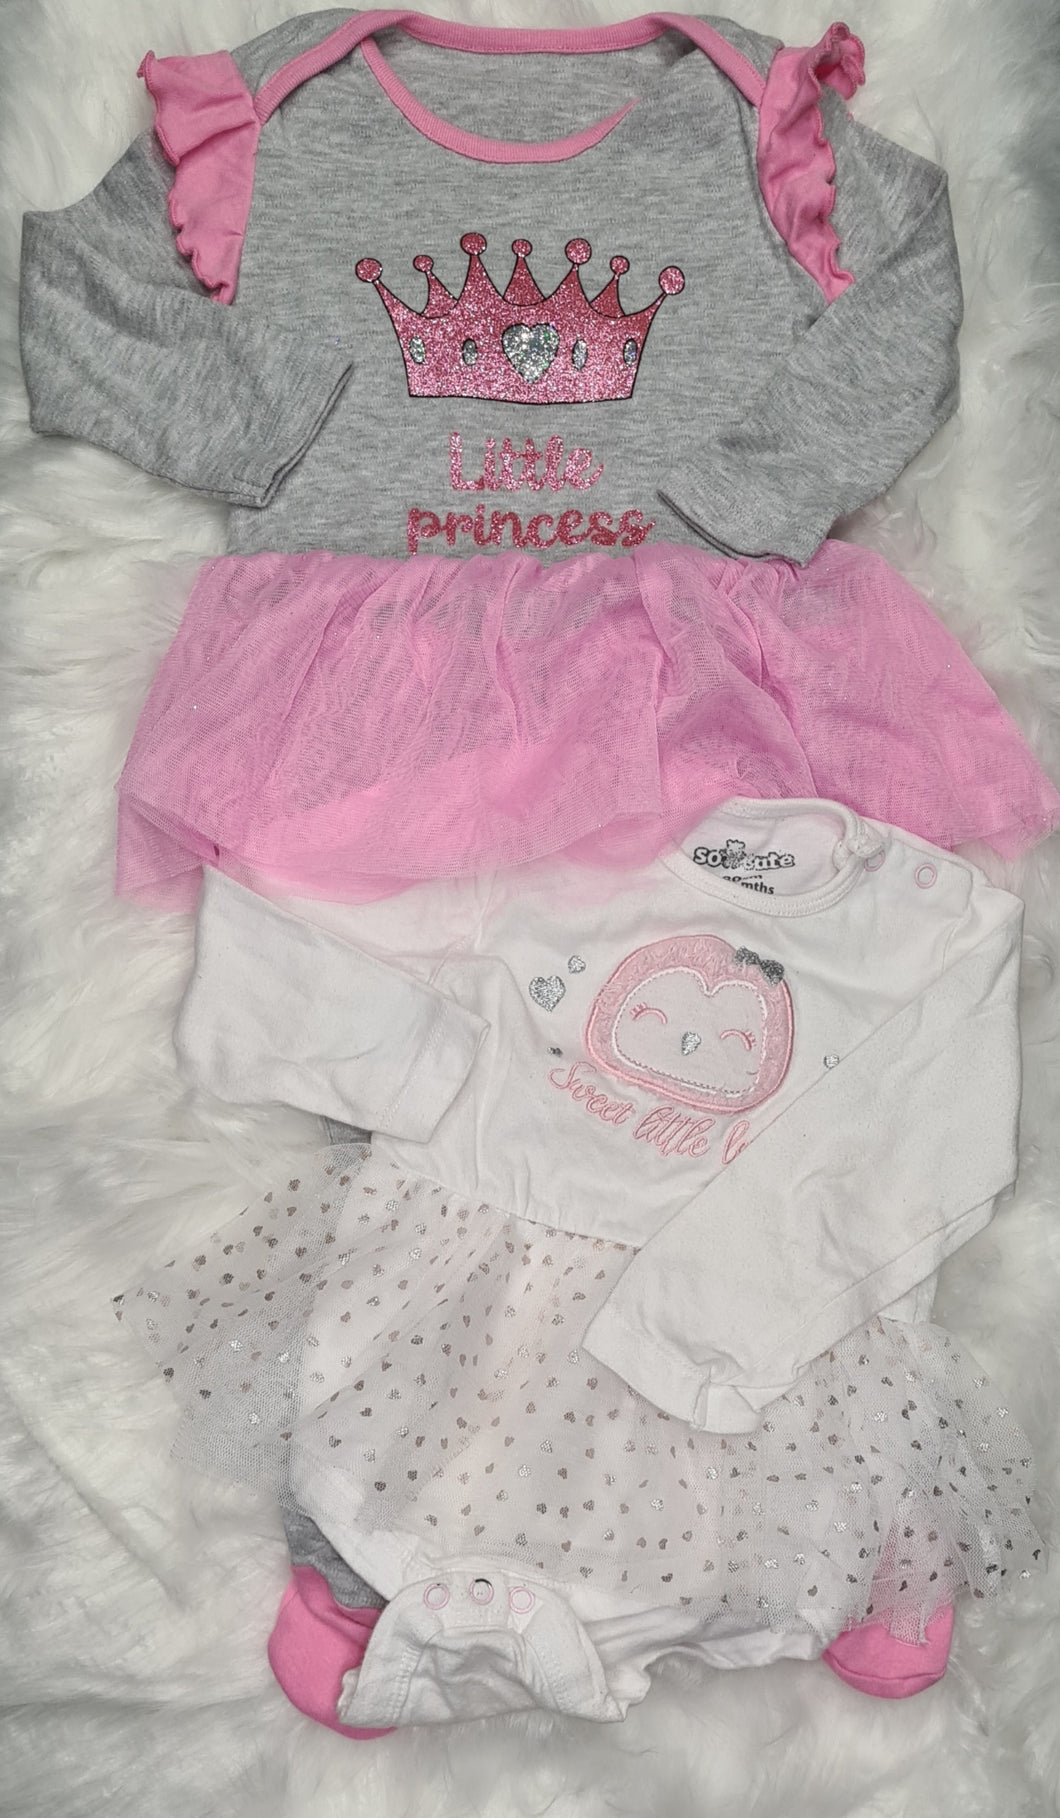 Girls 9-12 Months - Tutu Babygrow's - Misc Brand - Pink and White